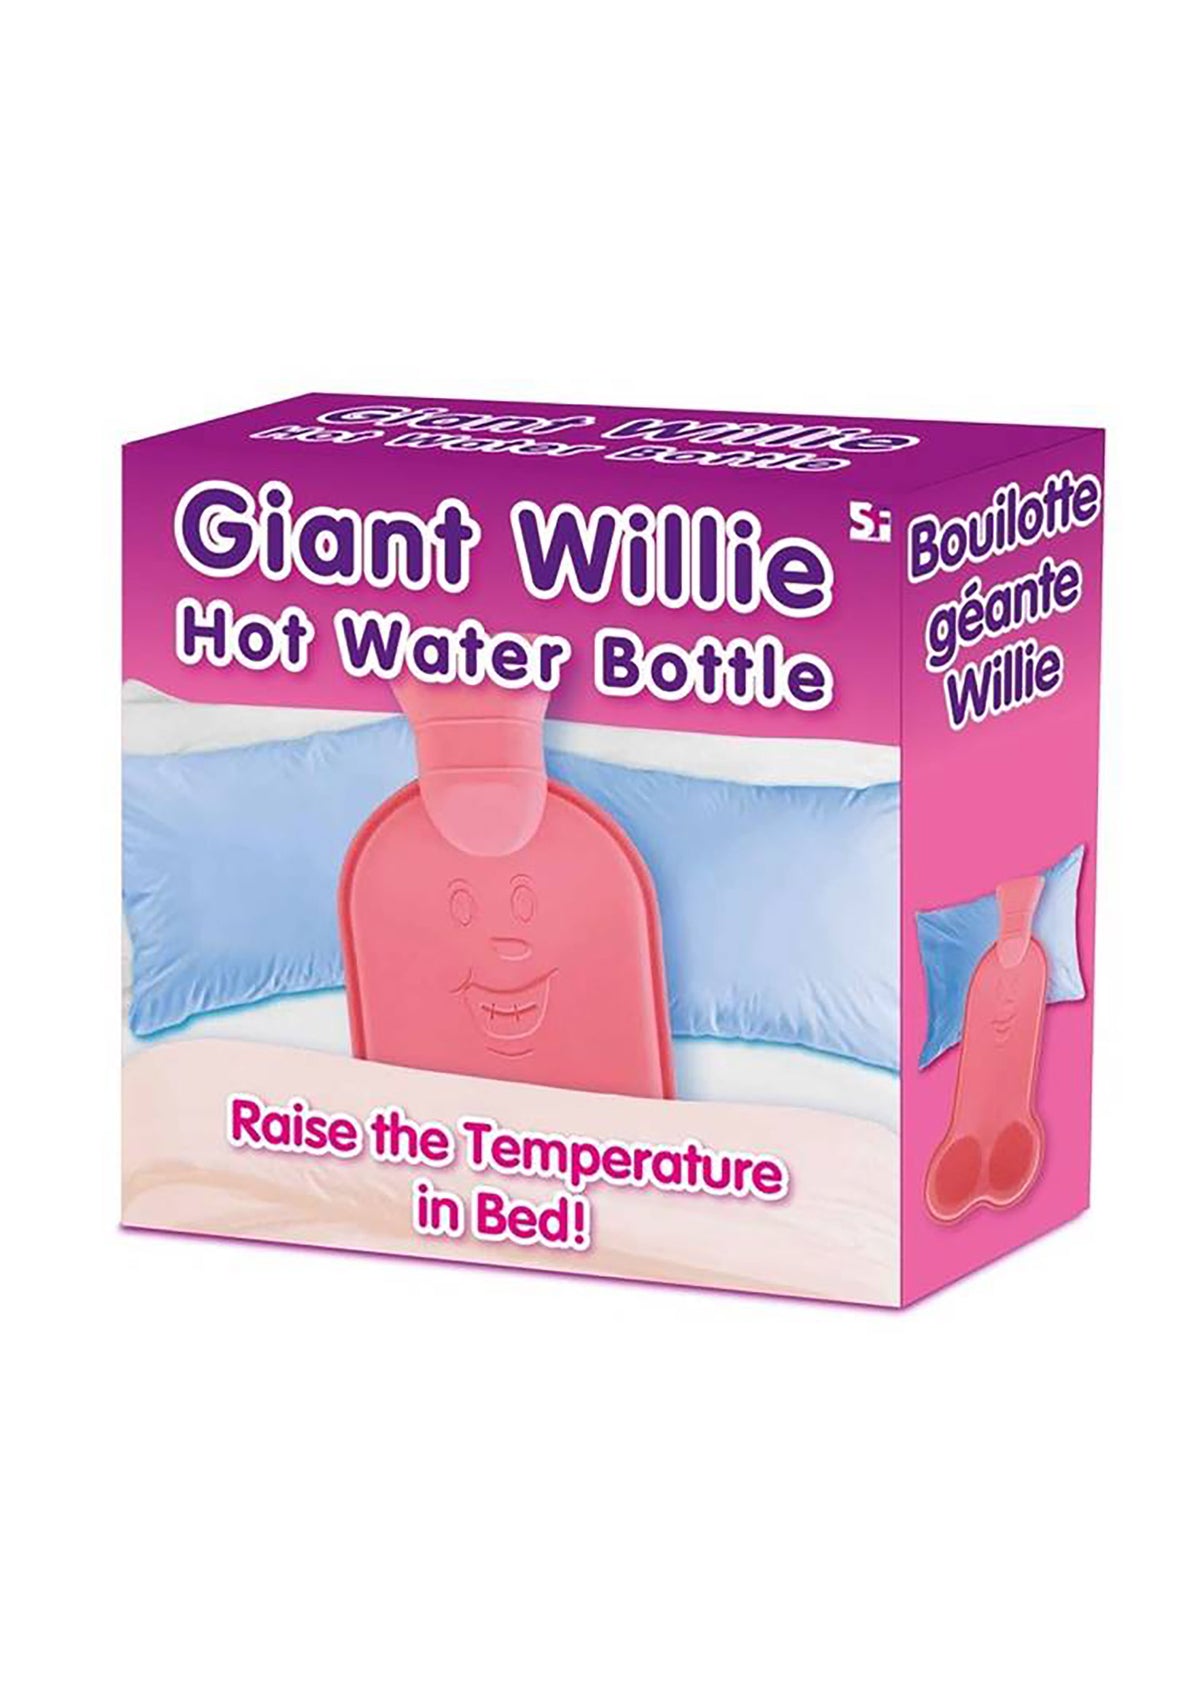 Giant Willie Hot Water Bottle